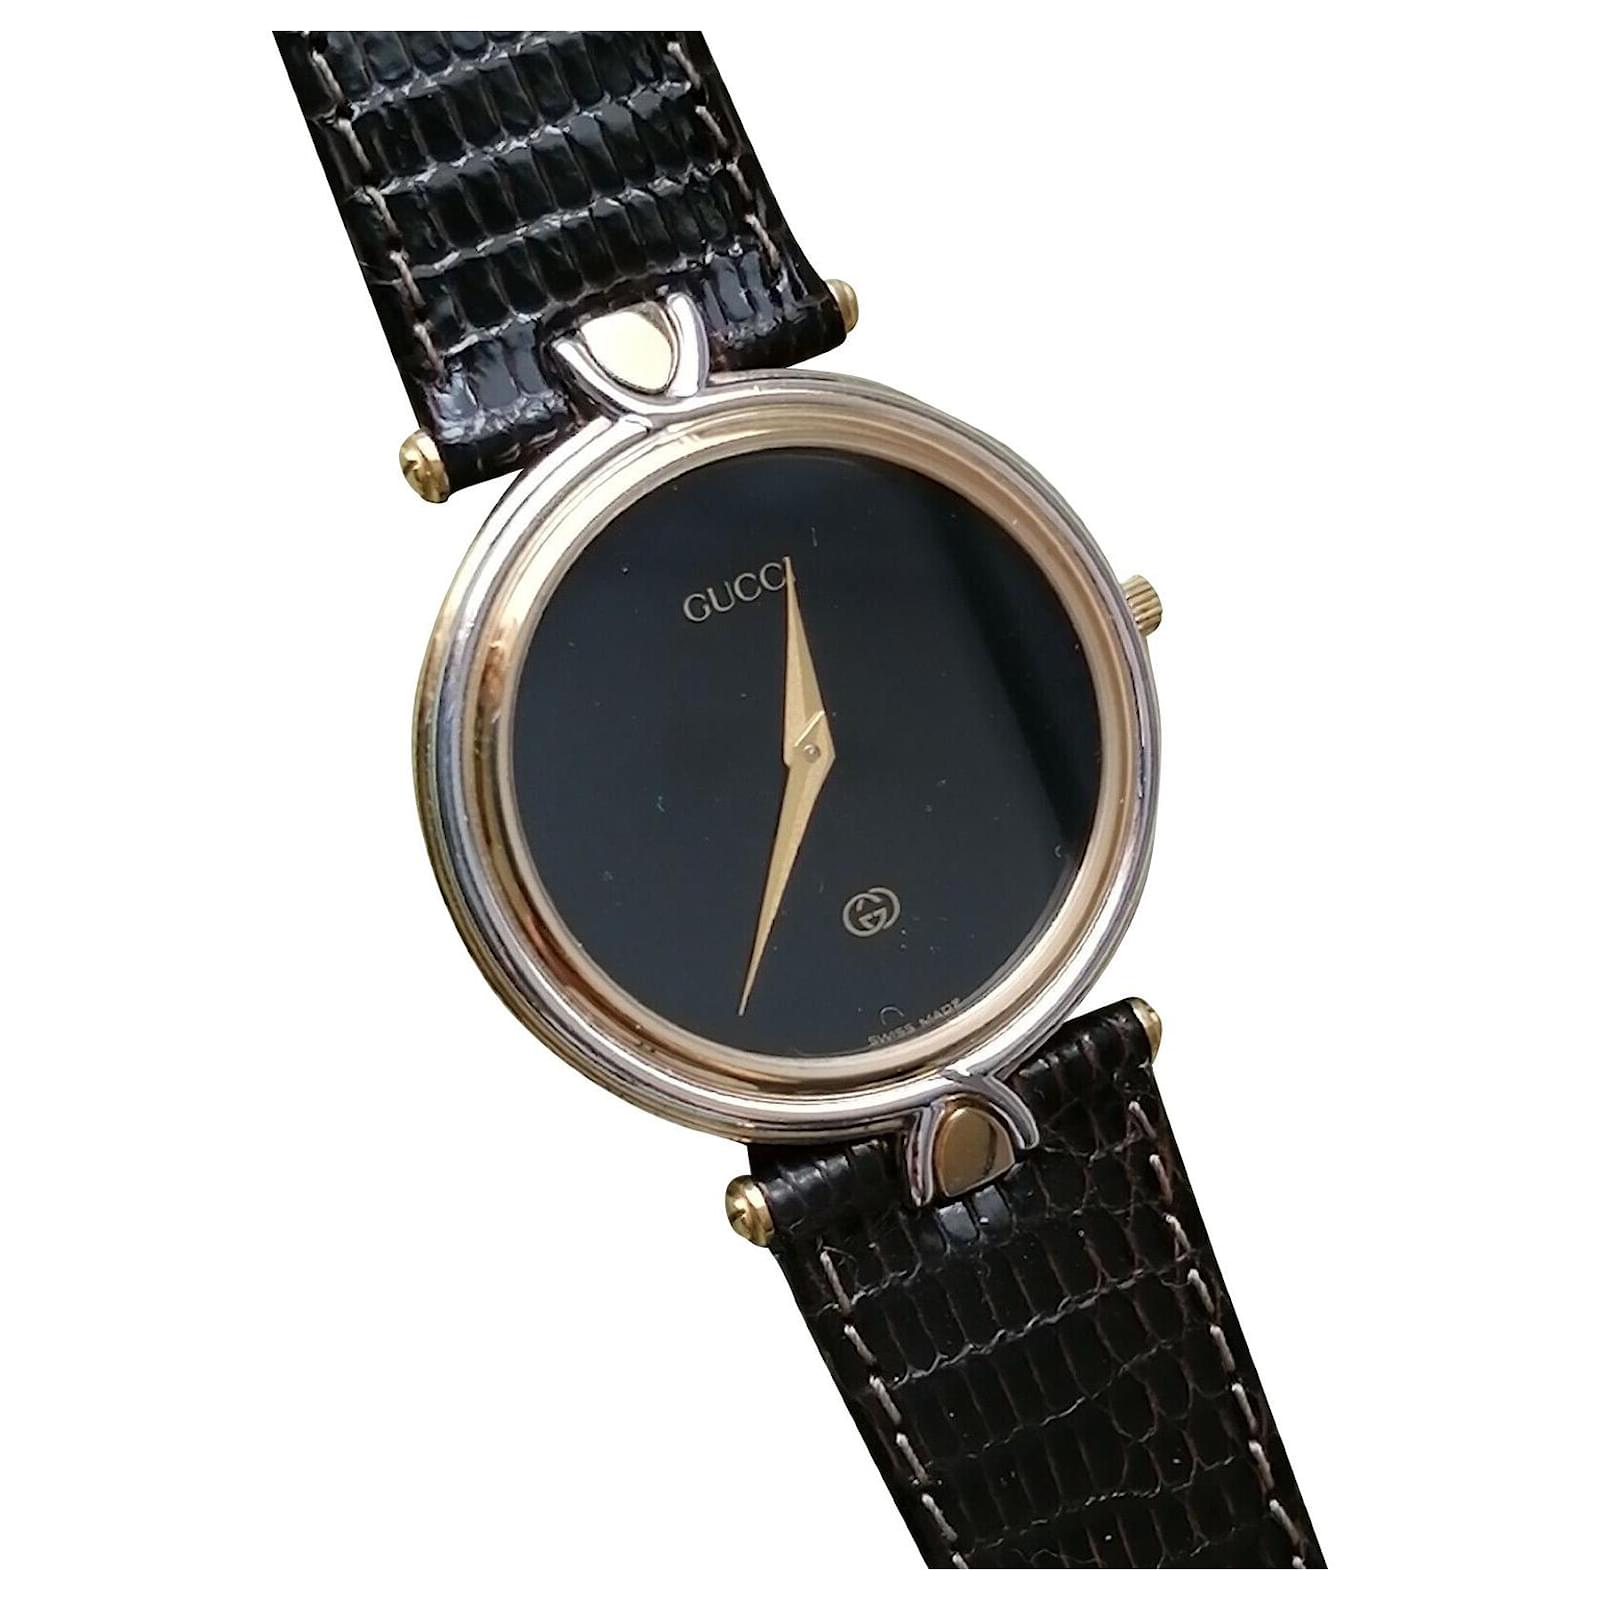 Original watch Gucci 4500 M ladies/men's wristwatch vintage Black